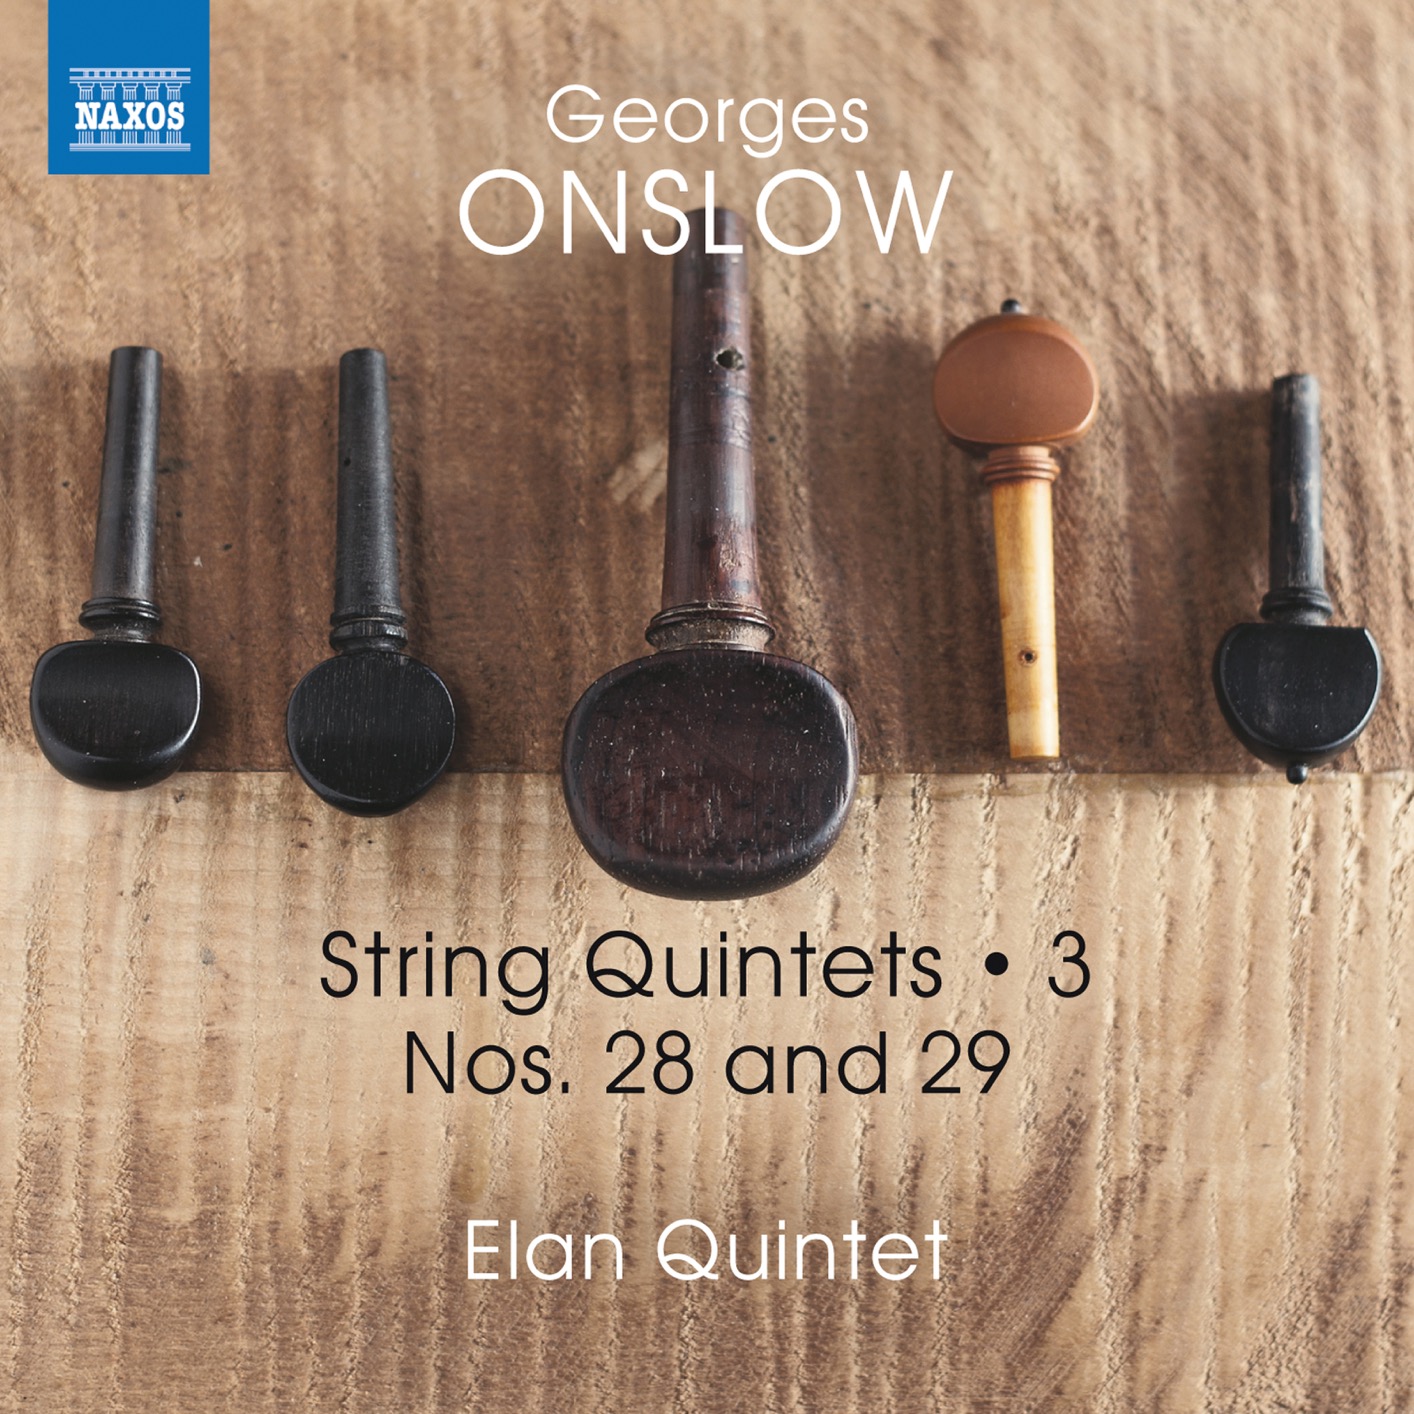 Elan Quintet - Onslow: String Quintets, Vol. 3 - Nos. 28 & 29 (2018) [FLAC 24bit/192kHz]